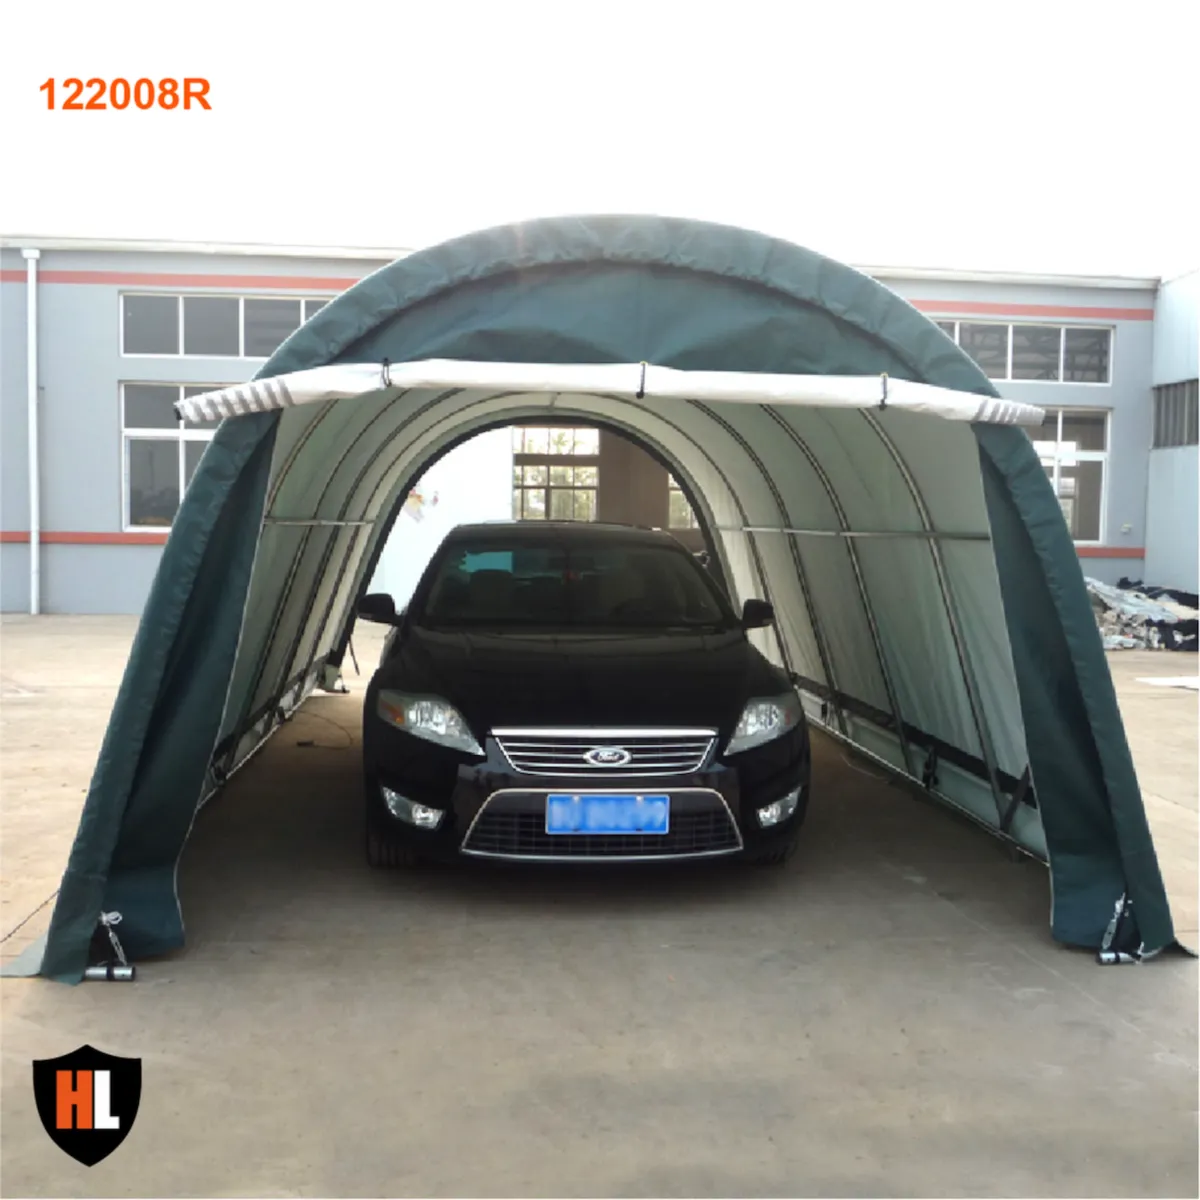 Carport Garage Tent (12x20x8) (Military Green) - Image 1